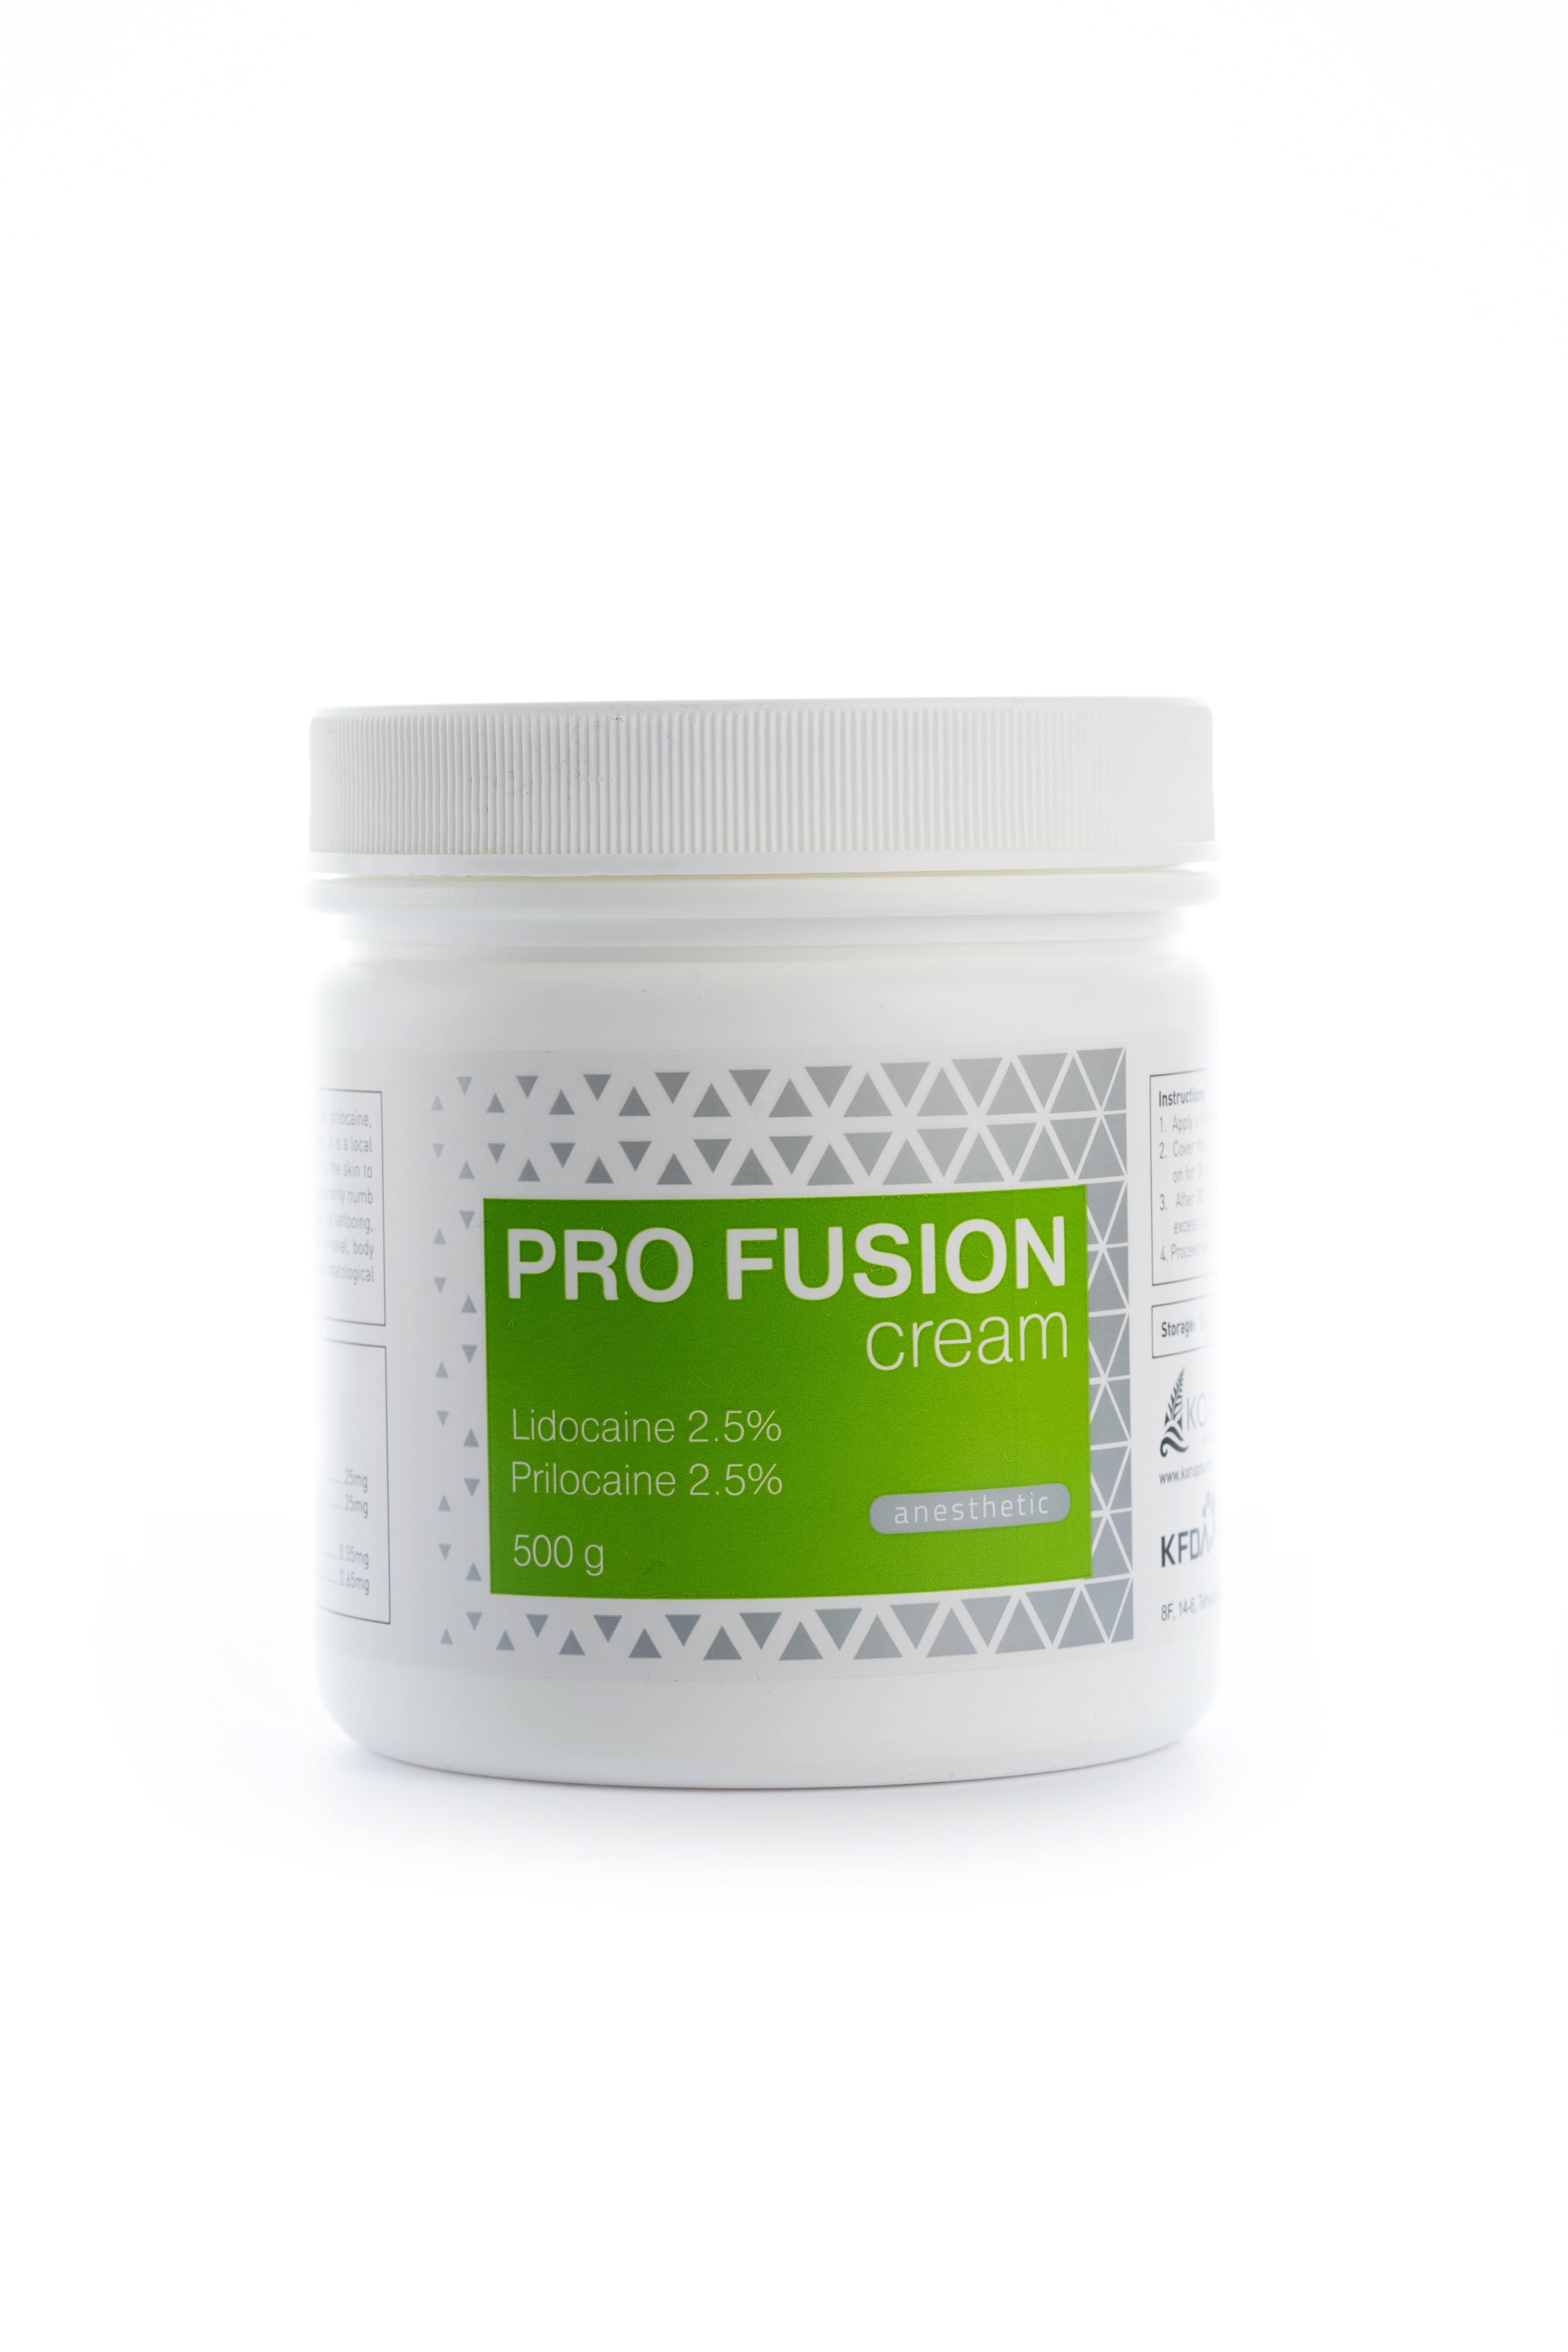 Pro Fusion cream _ 500g _ Local Anesthetic